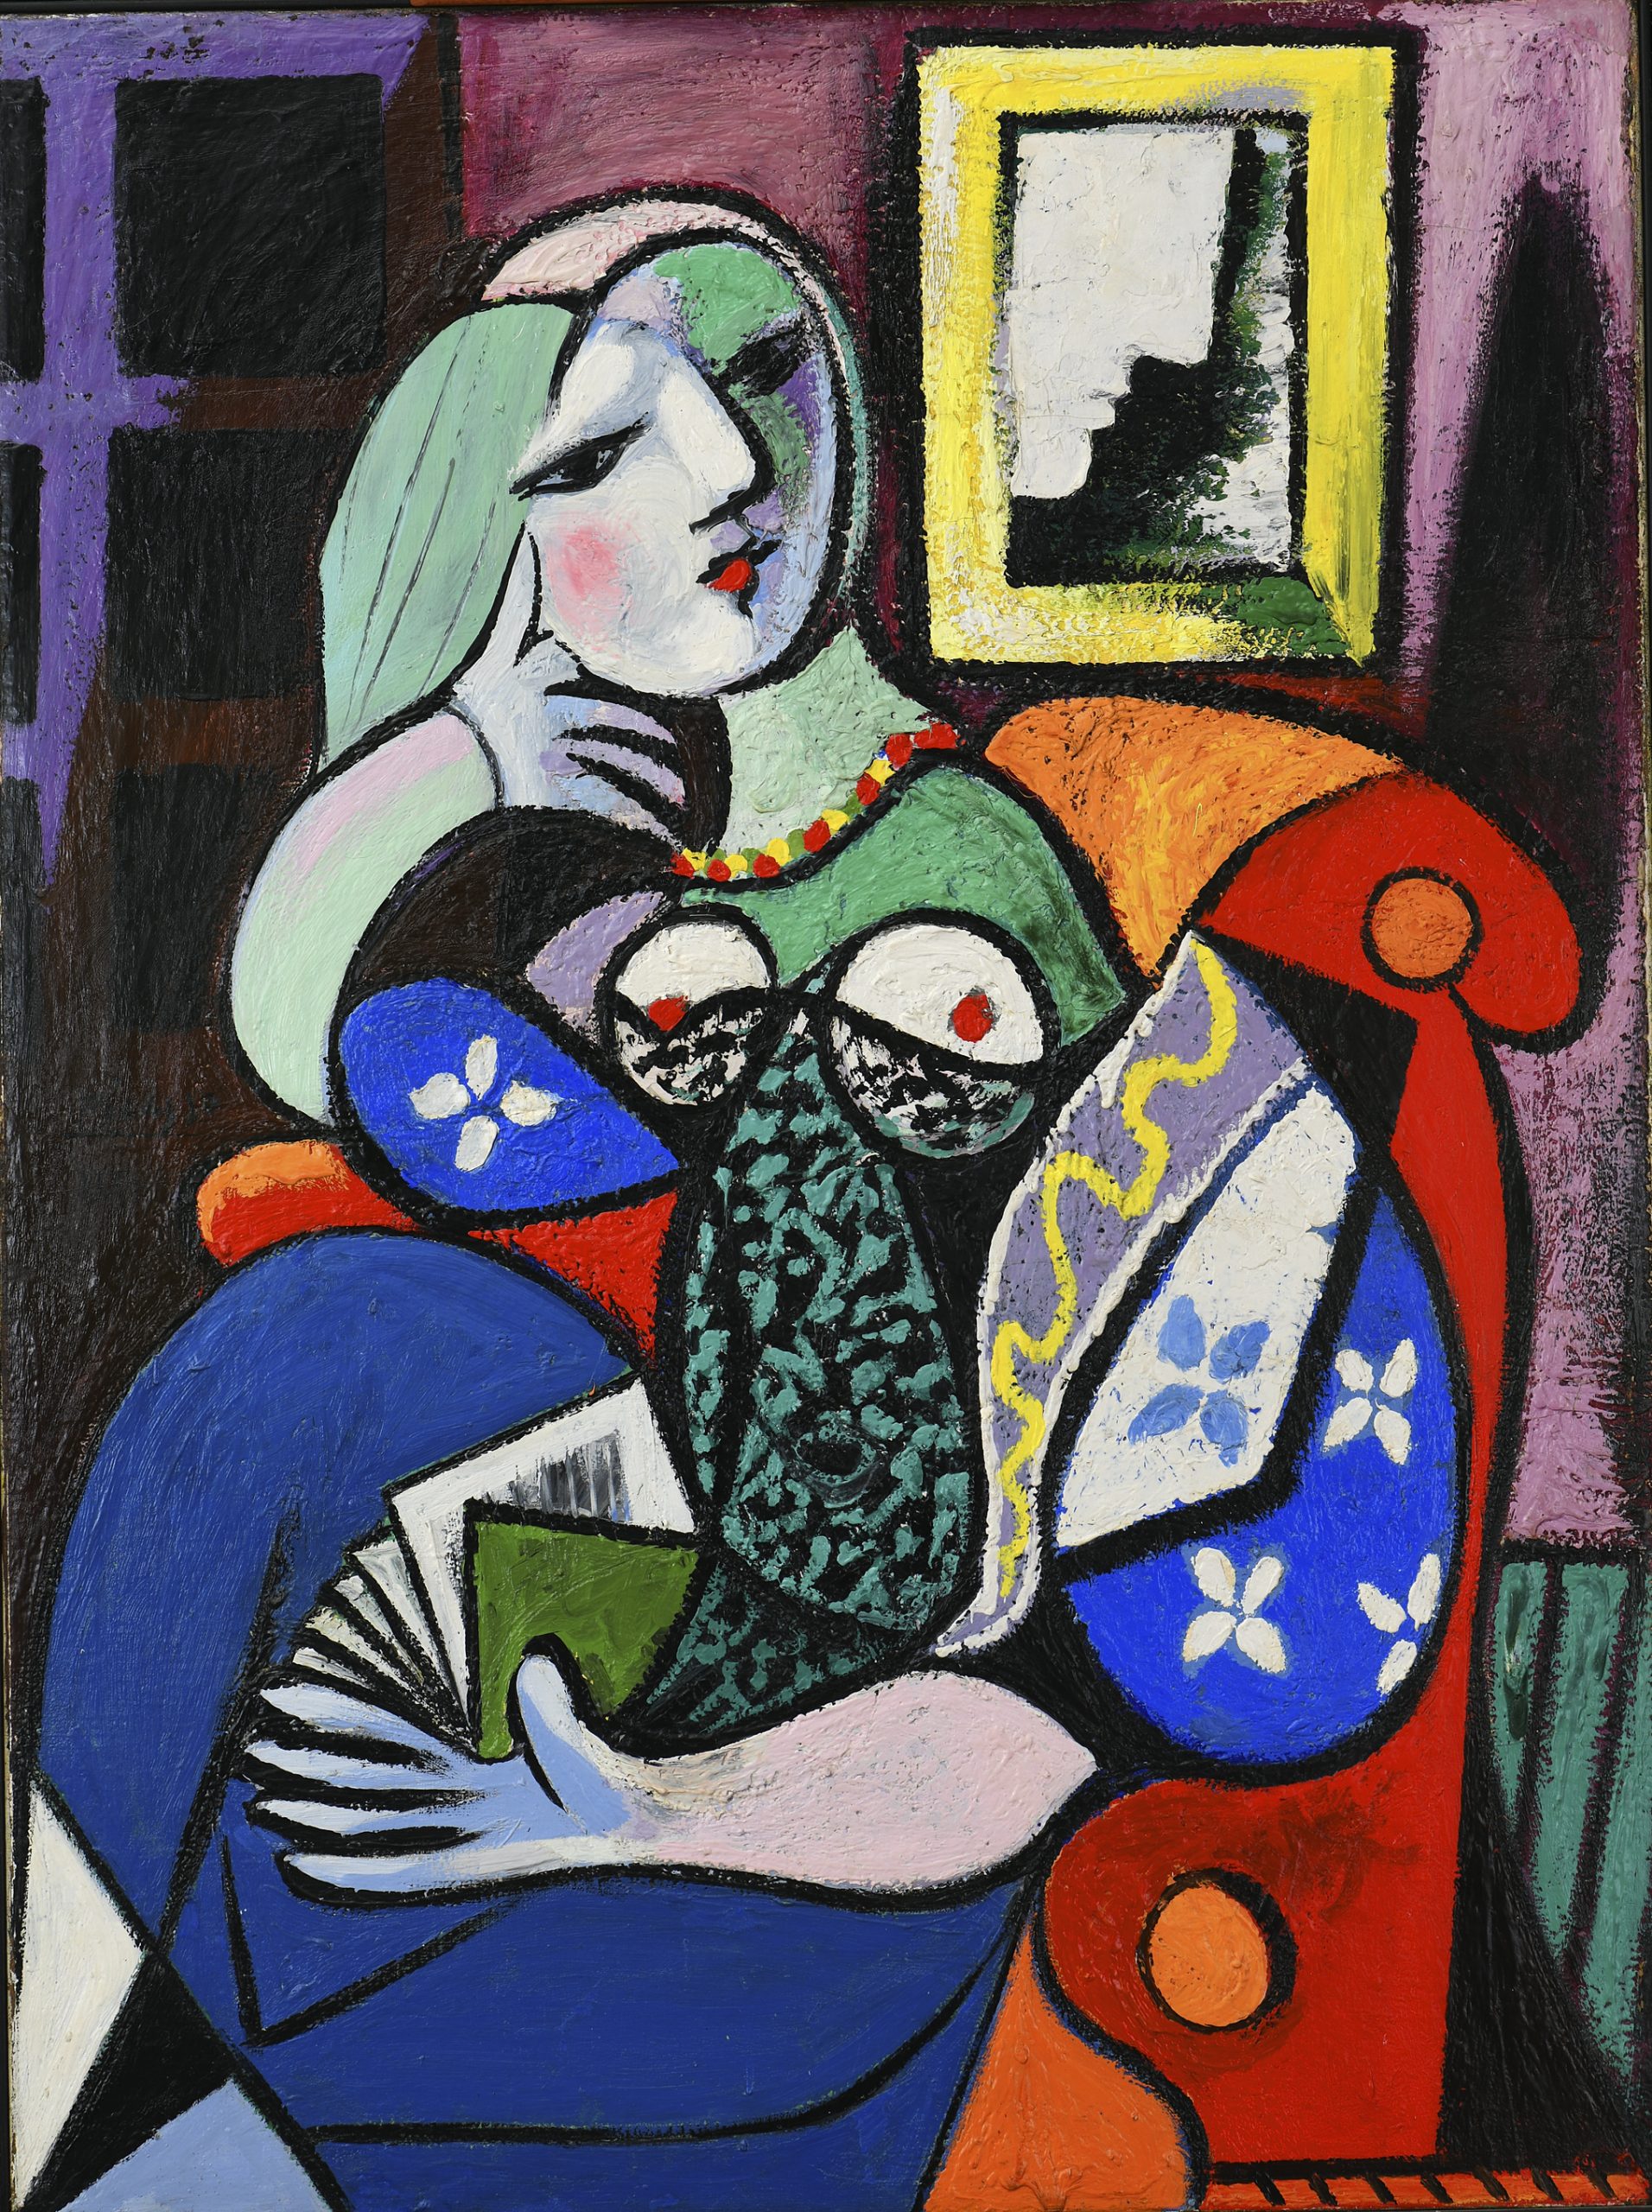 Pablo Picasso, Woman with a Book, 1932, Oil on canvas, 130.5 x 97.8 cm, The Norton Simon Foundation, © Succession Picasso/DACS 2021 / photo The Norton Simon Foundation